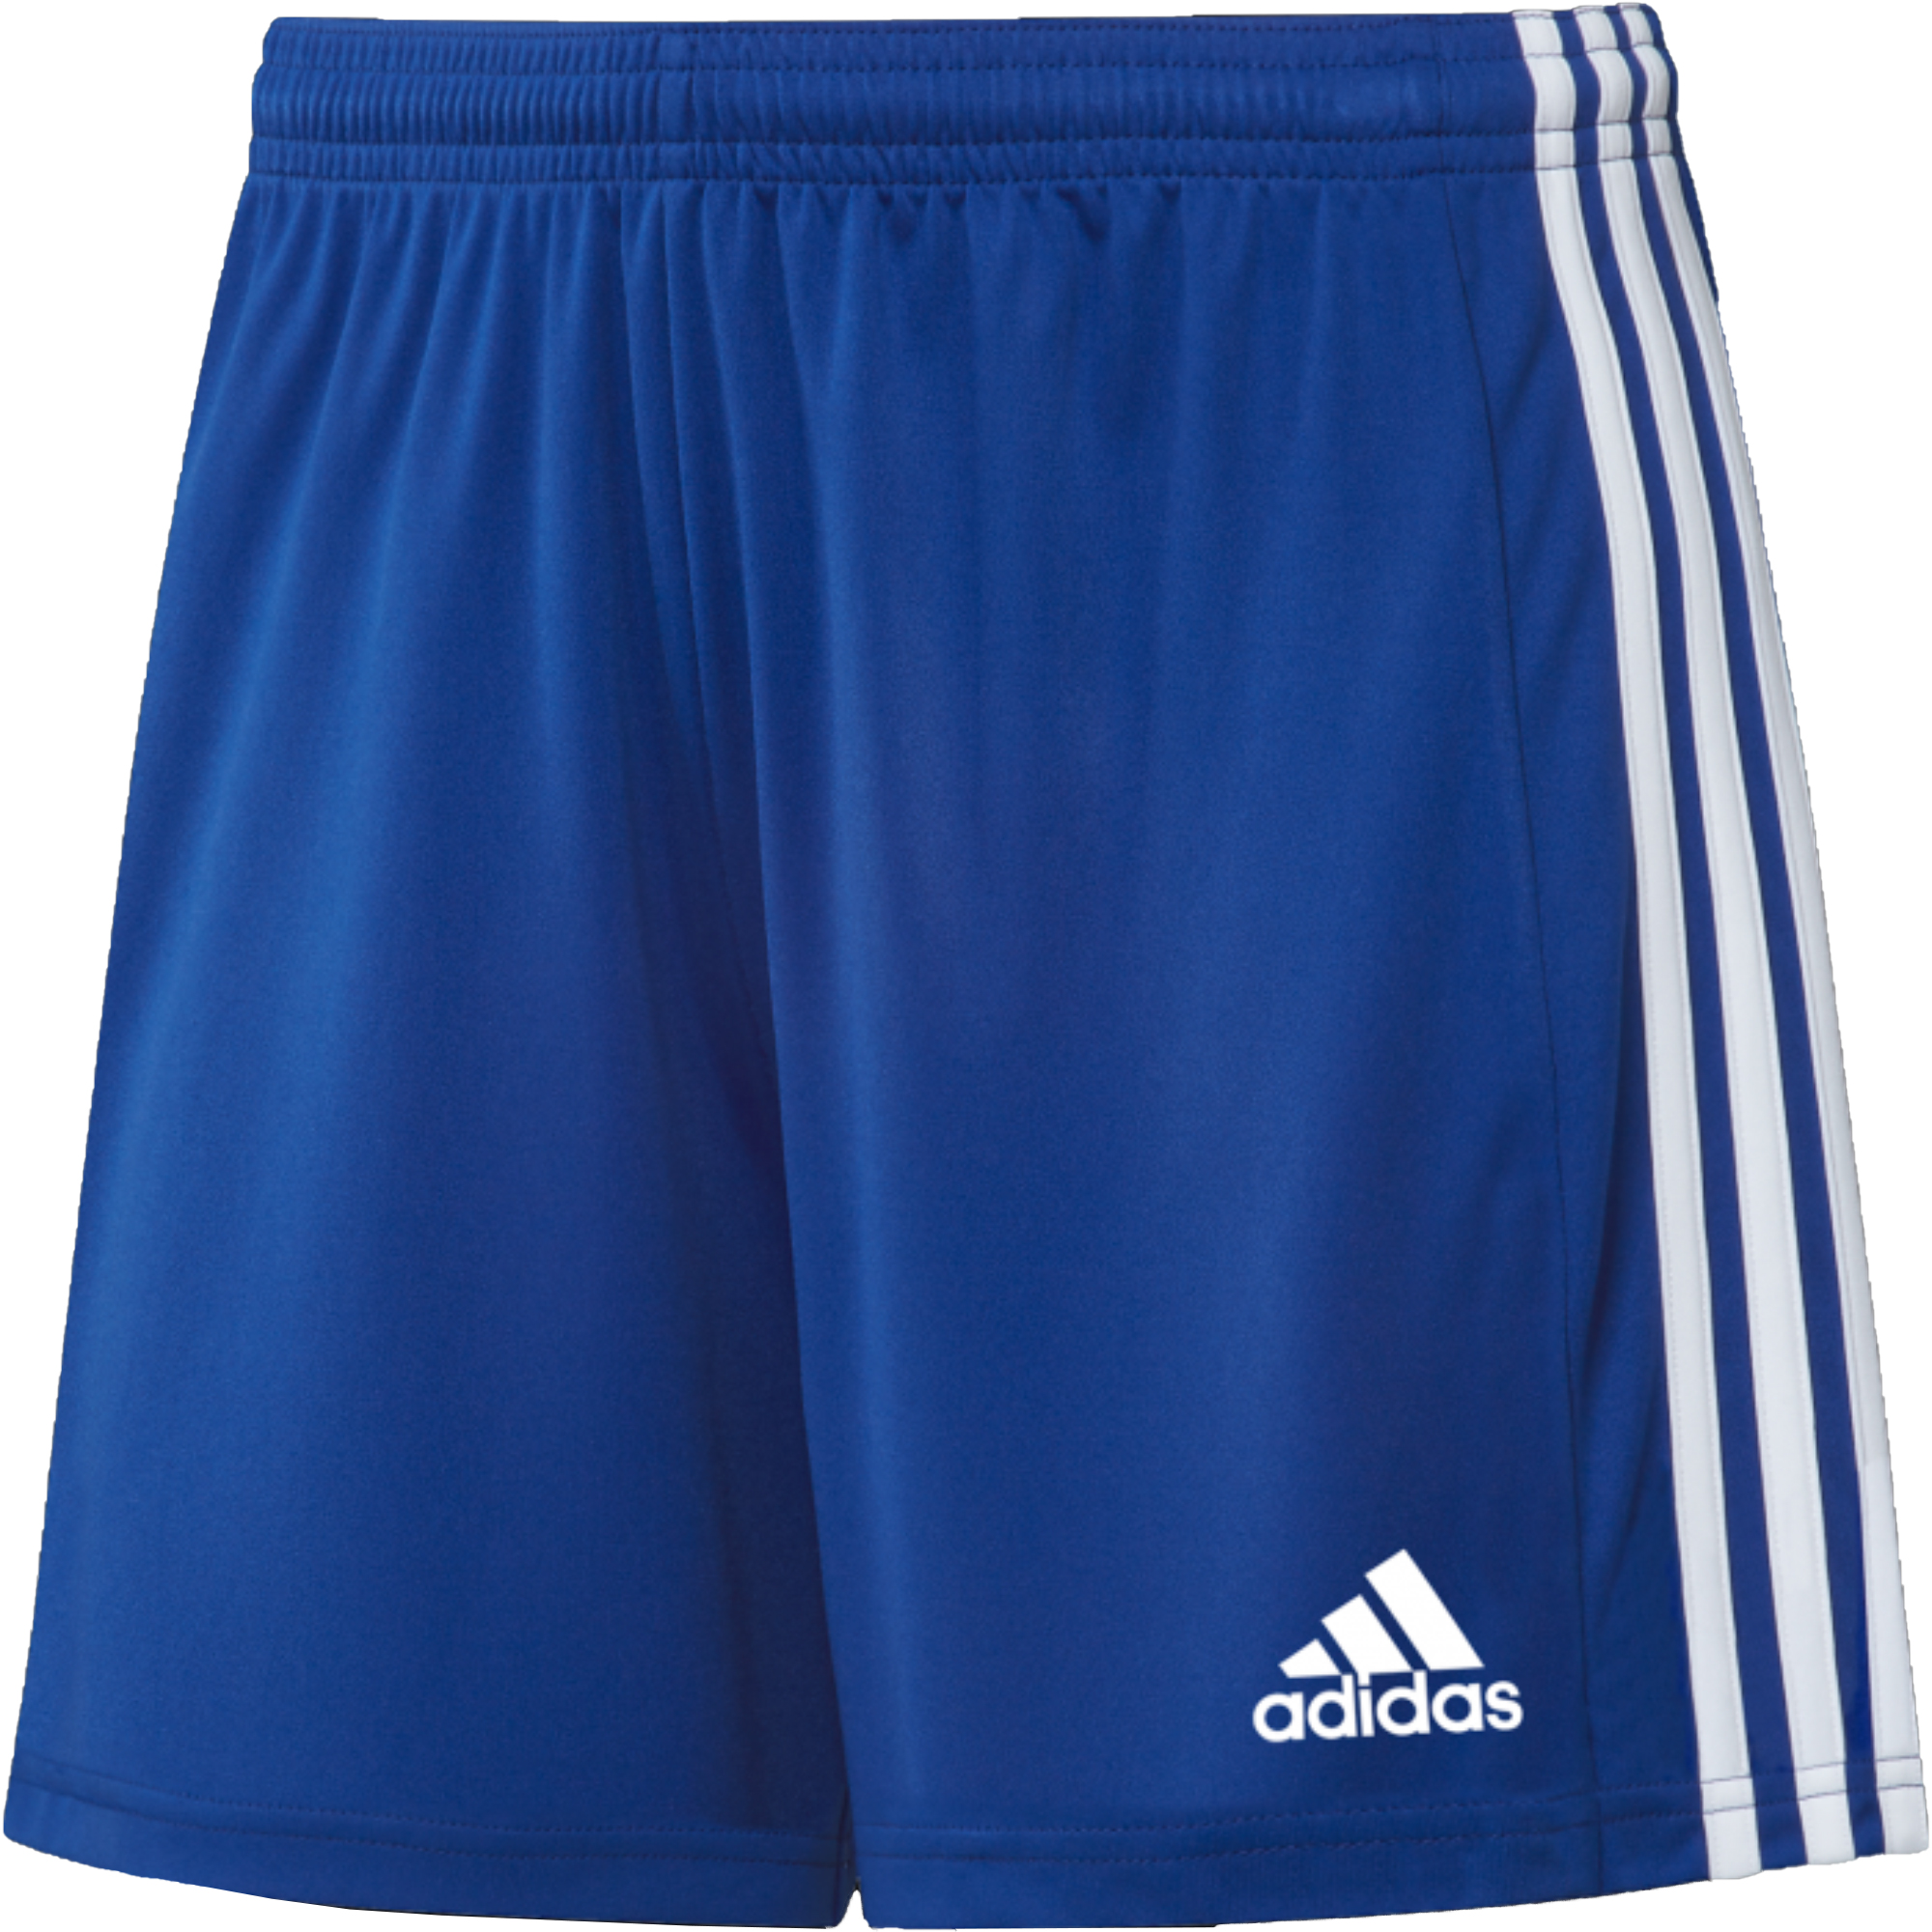 stefanssoccer.com:adidas Women's Squadra 21 Soccer Shorts - Royal